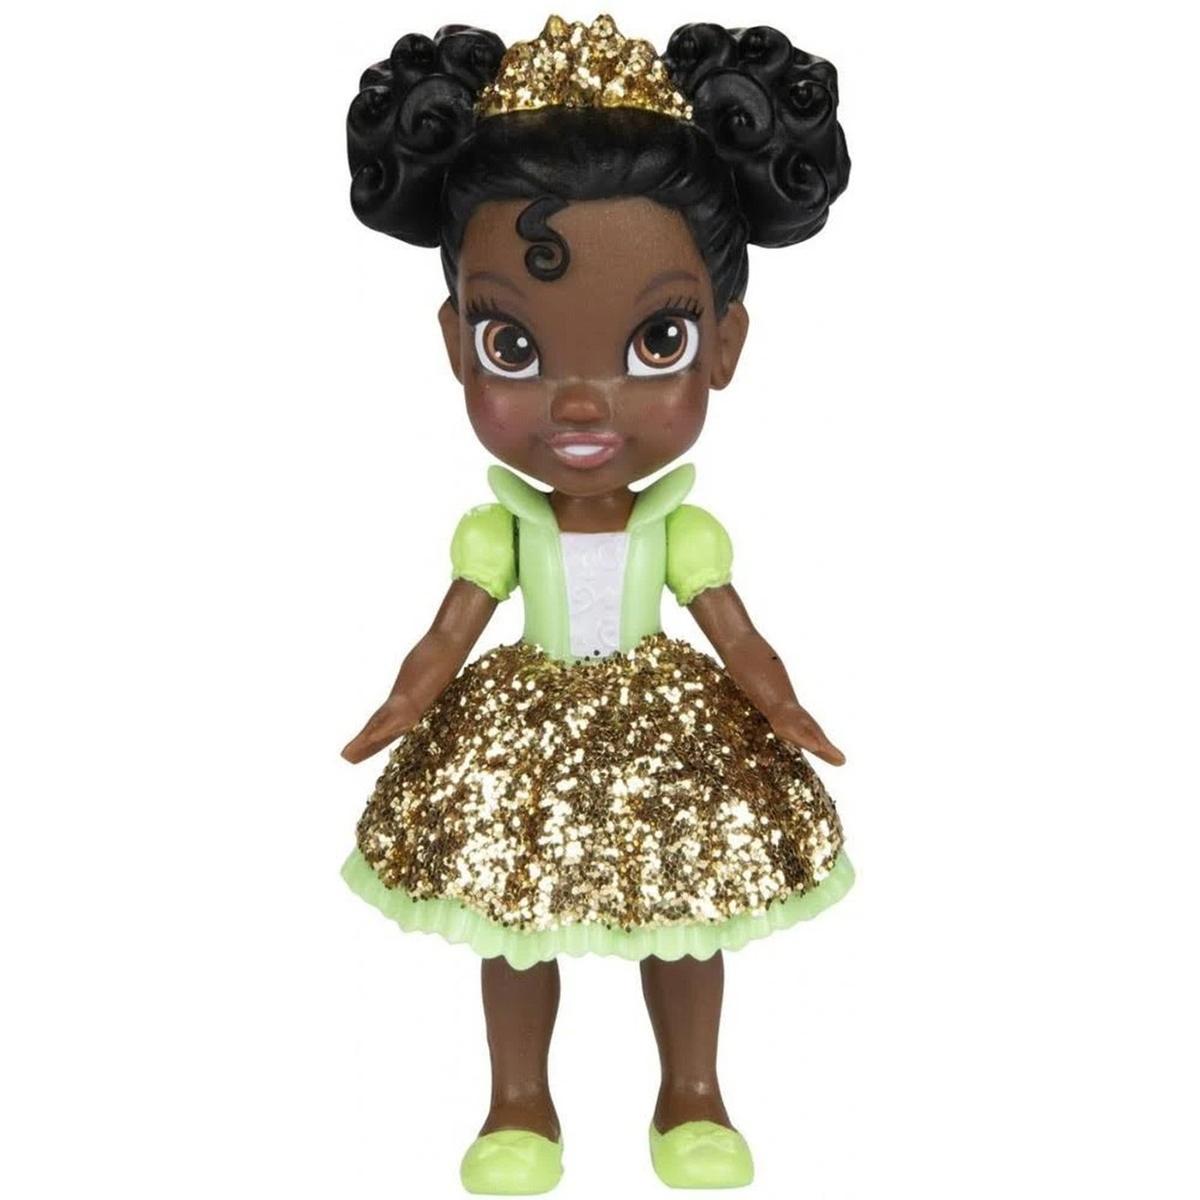 Disney - Princesas Disney - Mini muñecas Disney de 7 cm (Varios modelos) ㅤ  | Muñecas Princesas Disney & Accesorios | Toys"R"Us España